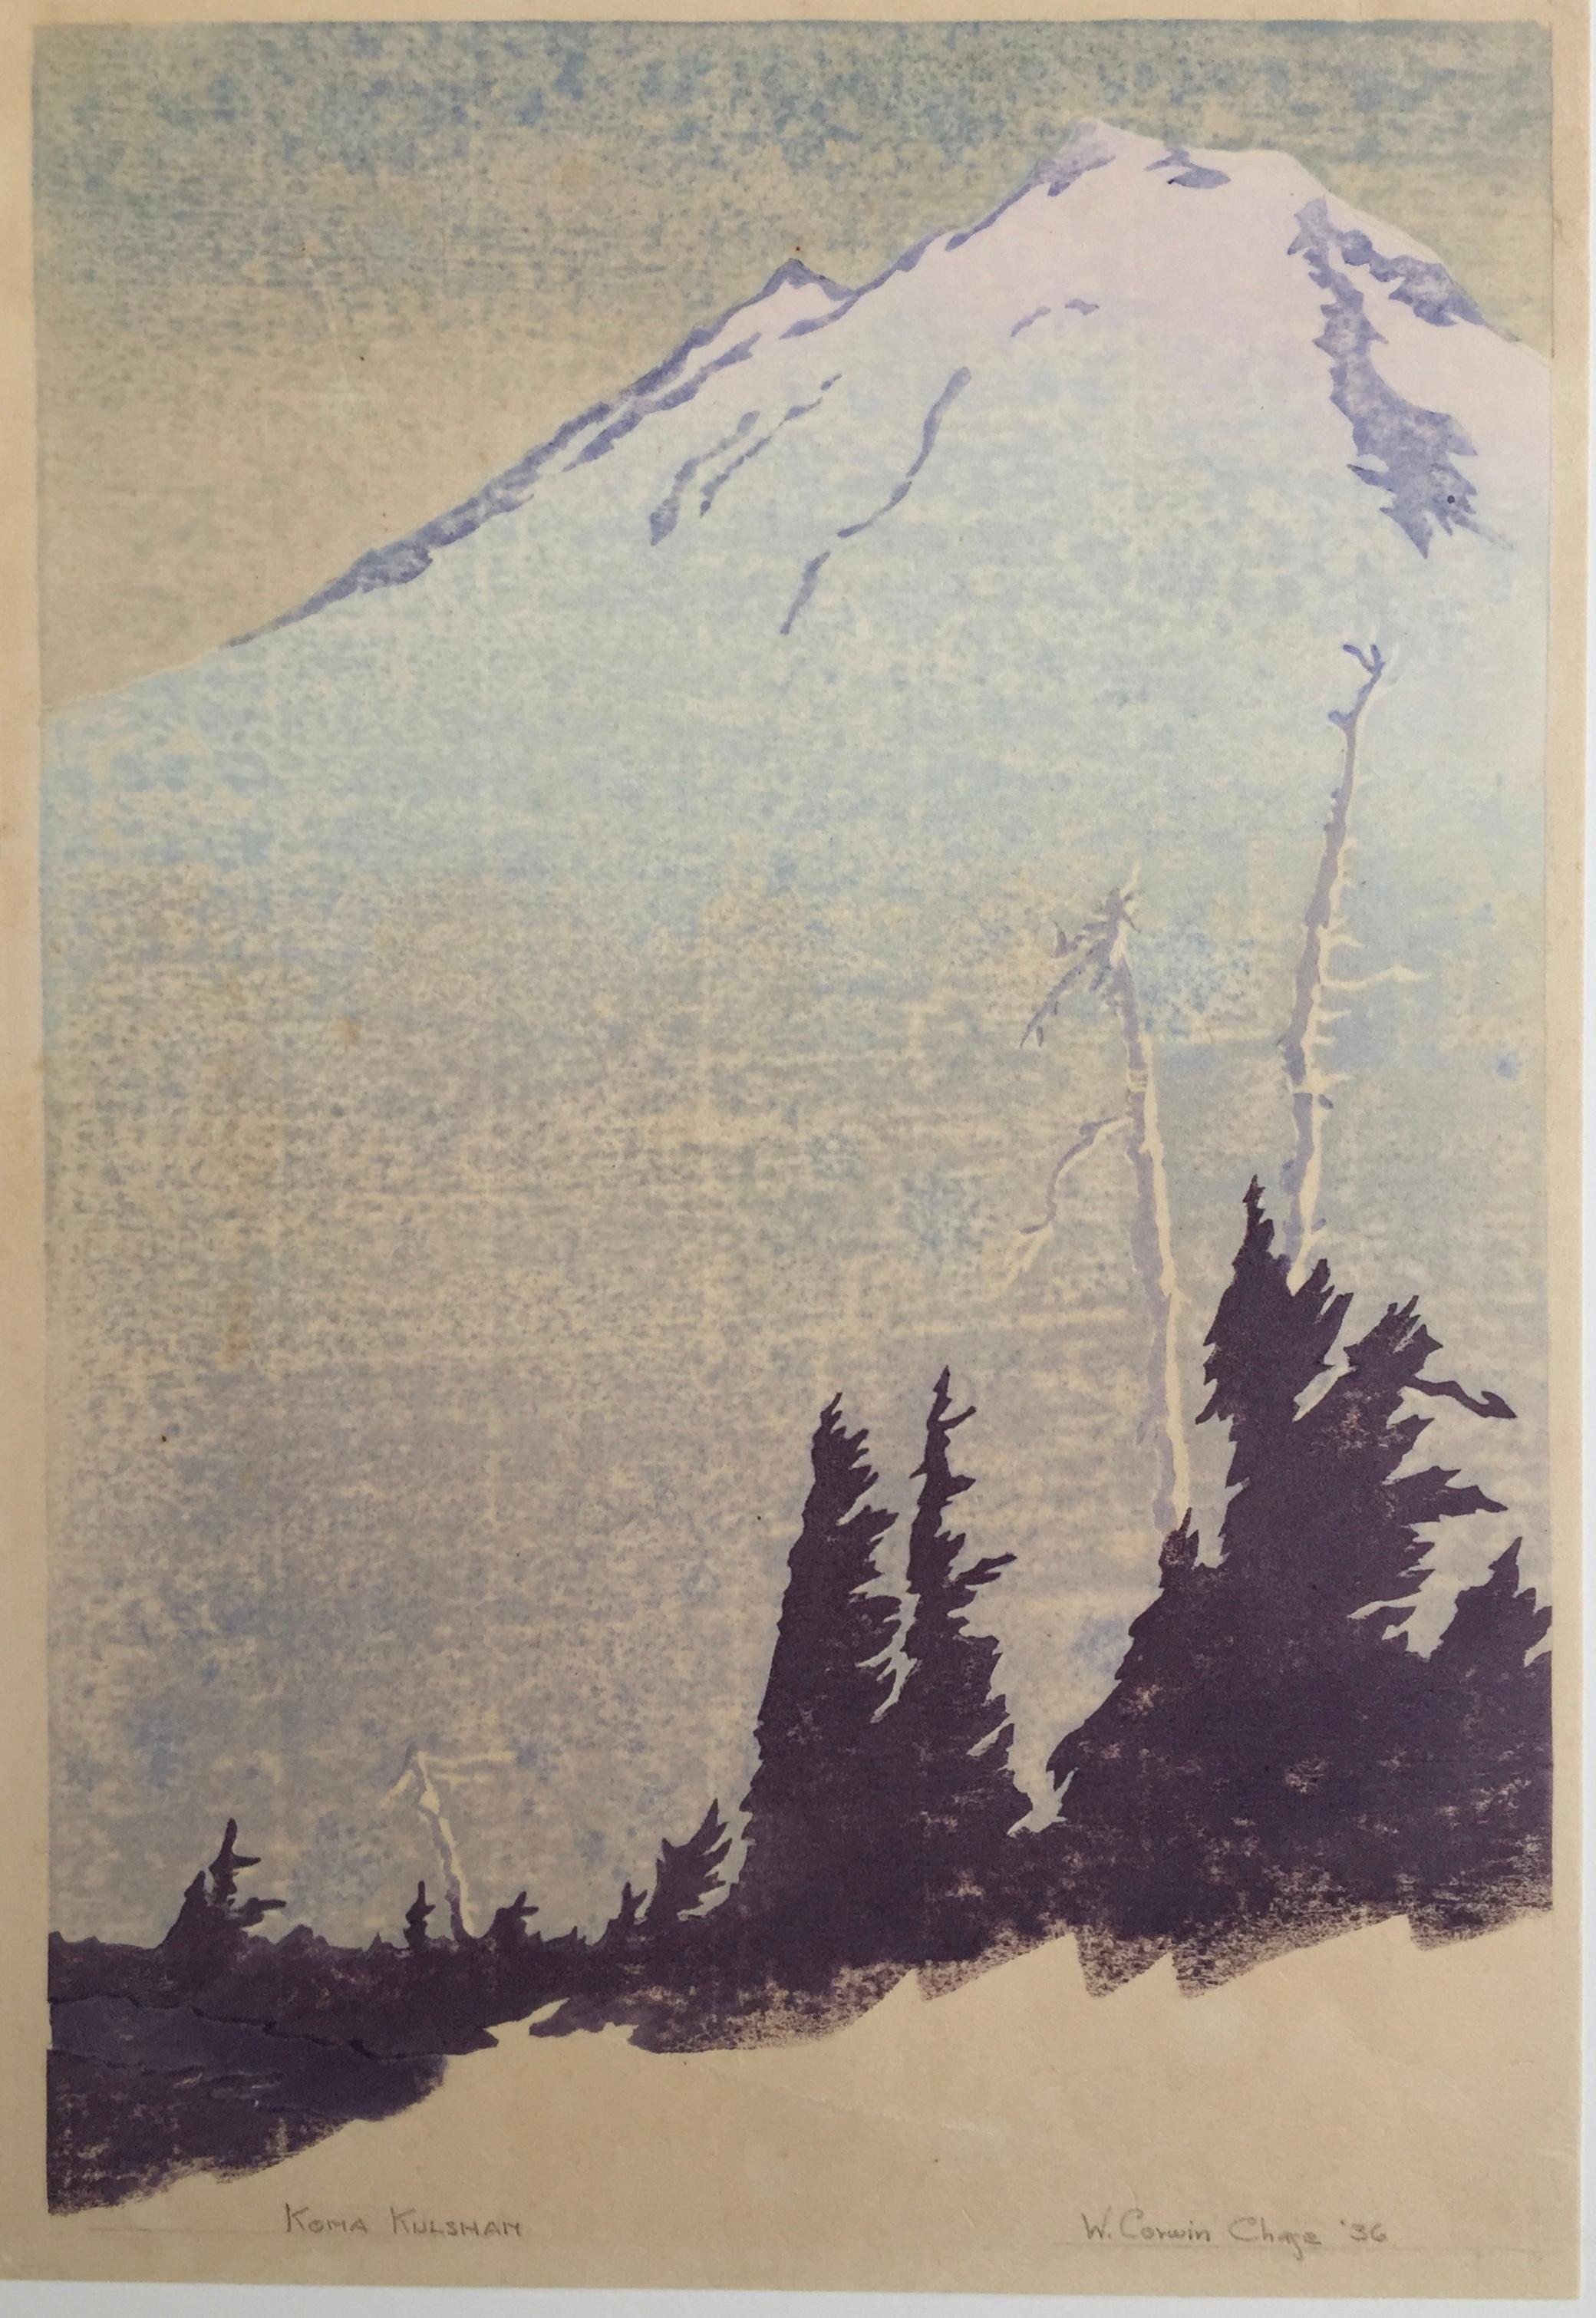 Wendell Corwin Chase Landscape Print - Mount Baker / Koma Kulsham, Washington State